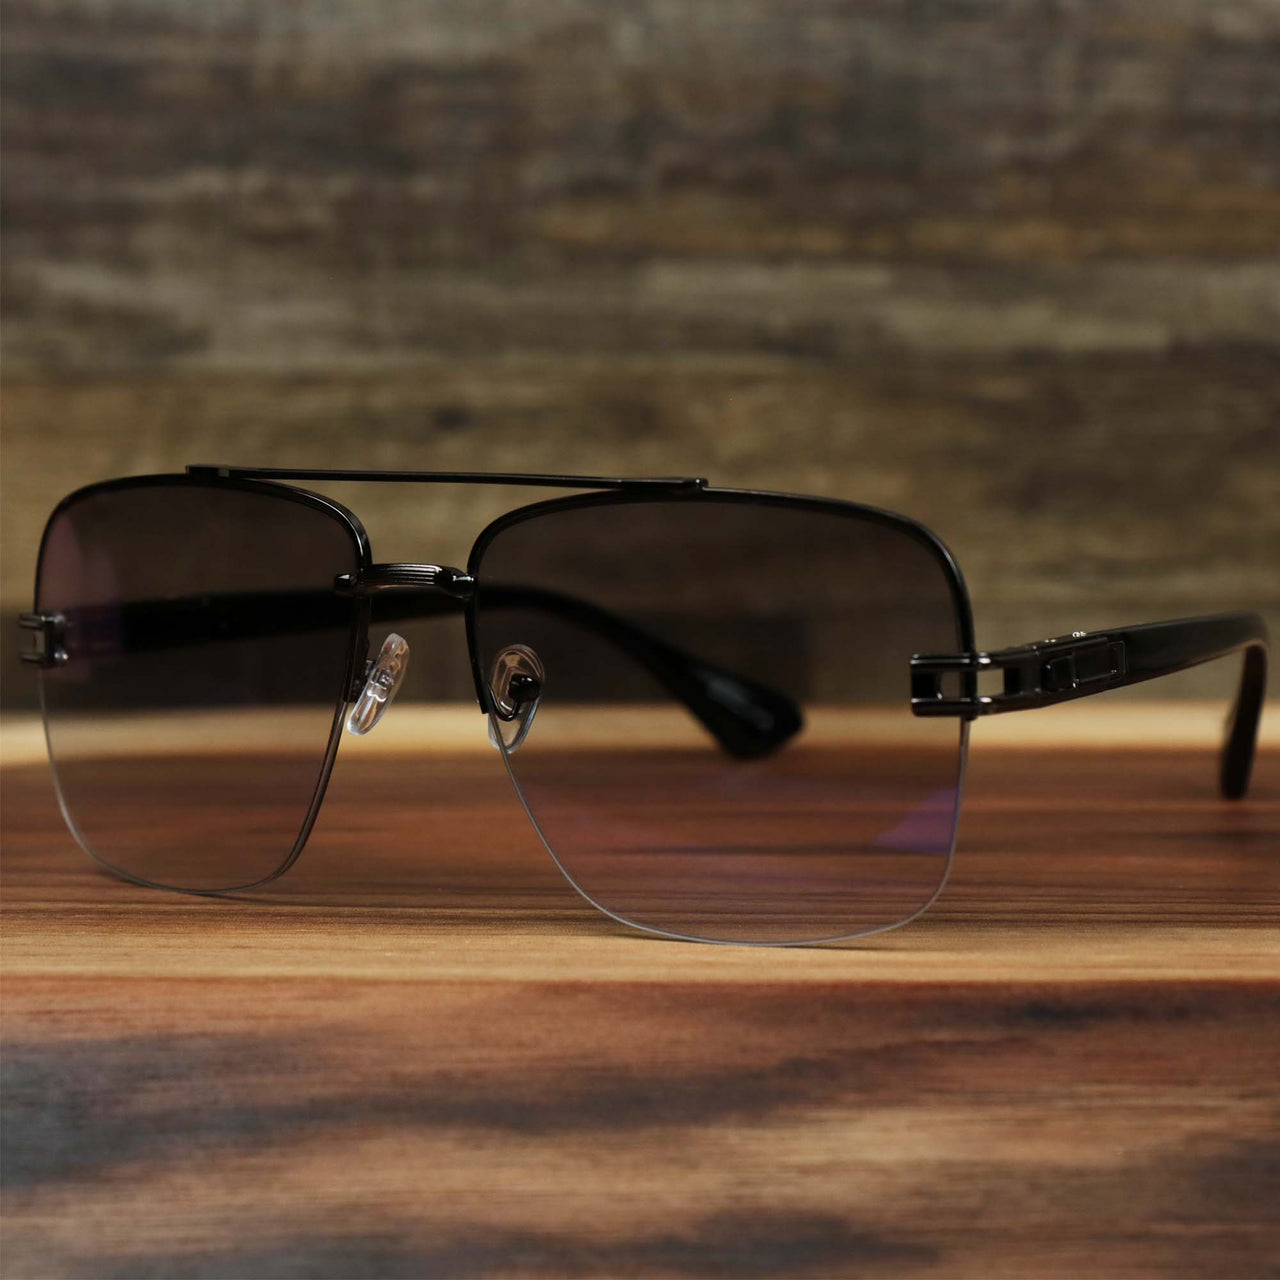 The Round Rectangle Frame Black Lens Sunglasses with Black Frame